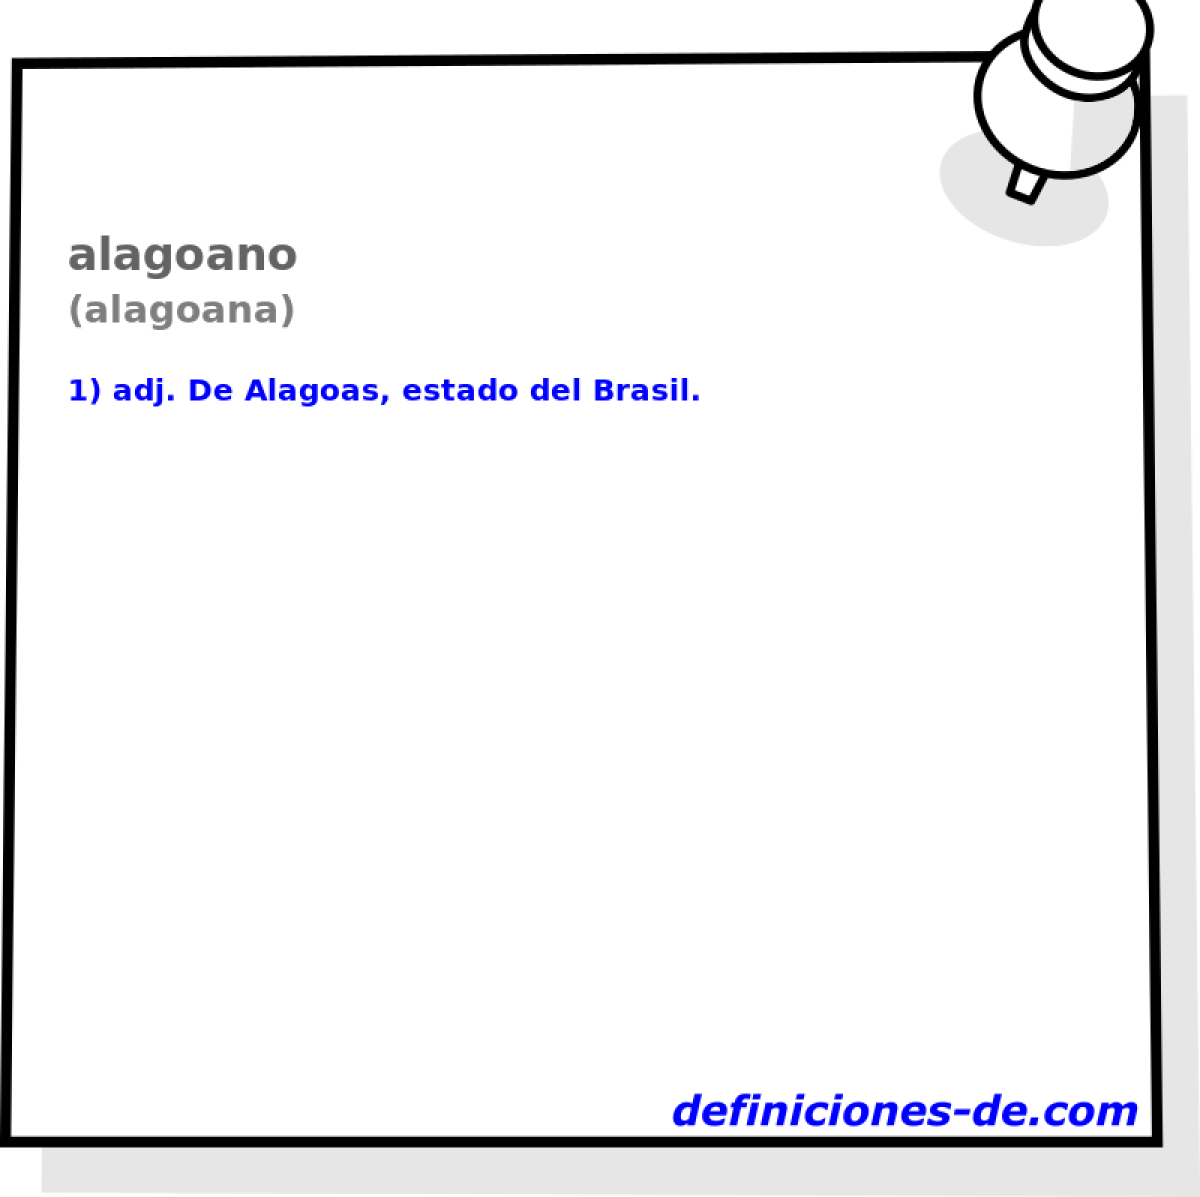 alagoano (alagoana)